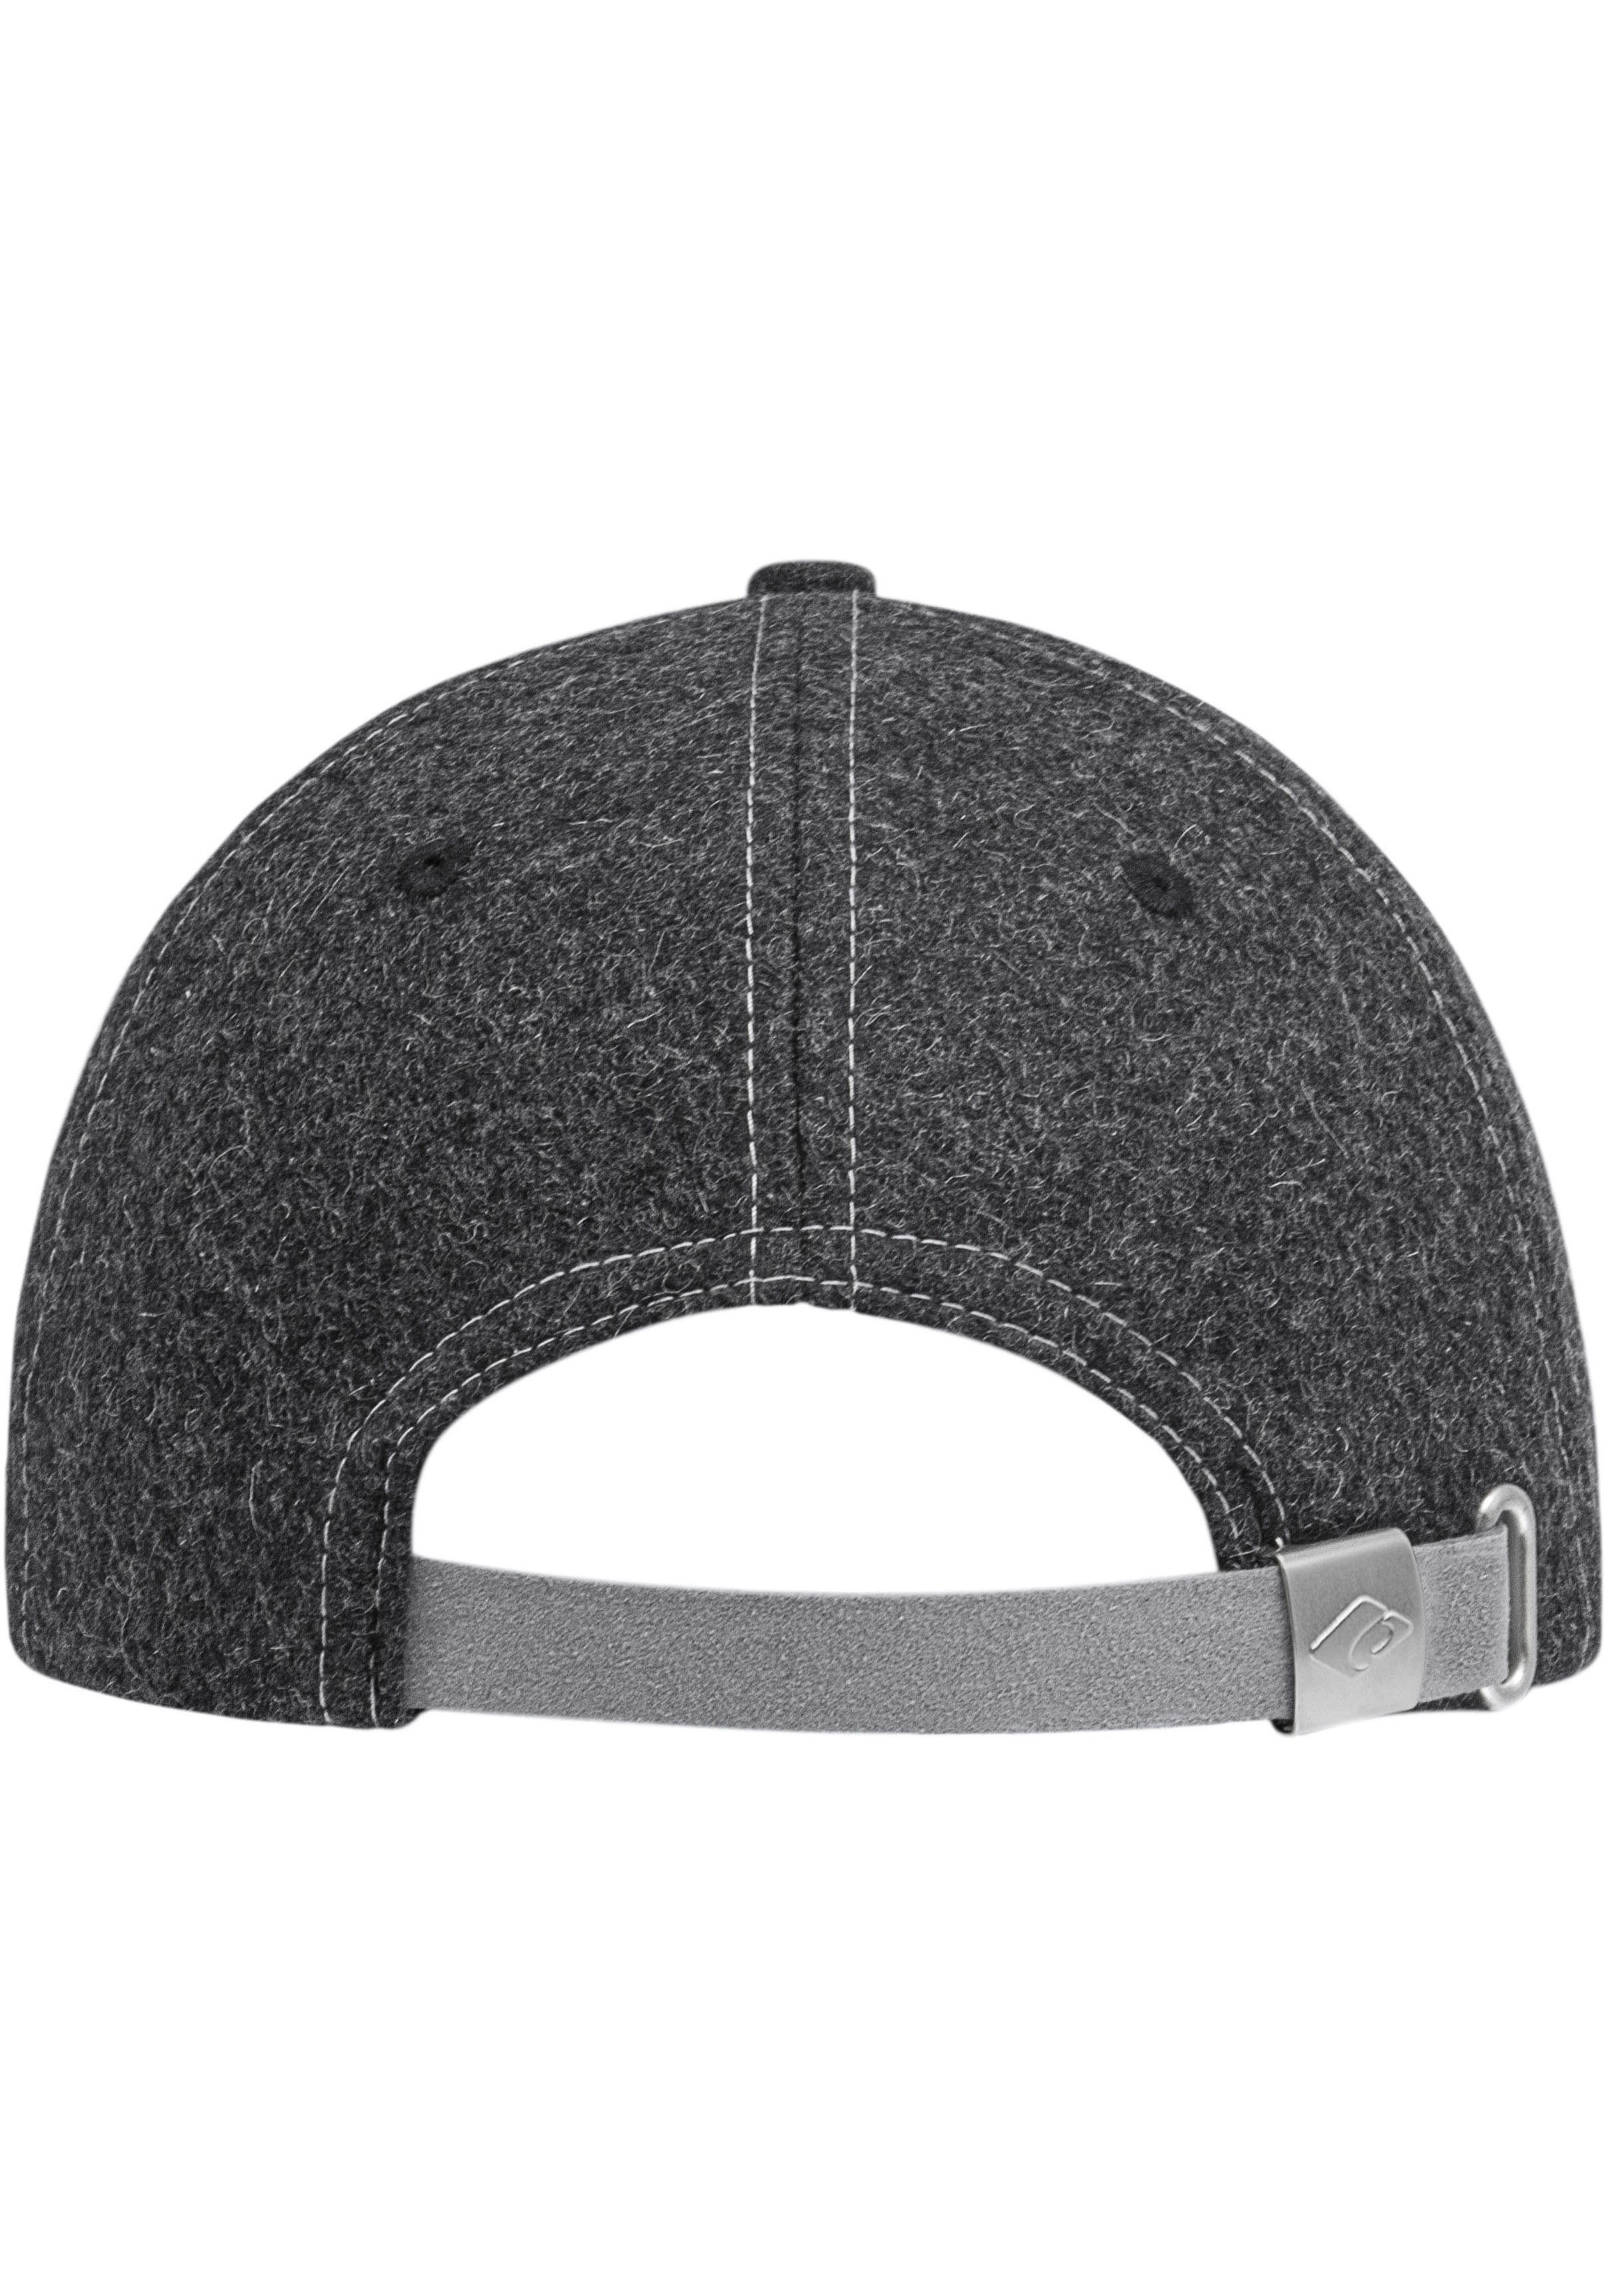 chillouts Baseball Cap Mateo dark Wasserabweisendes grey Material Hat